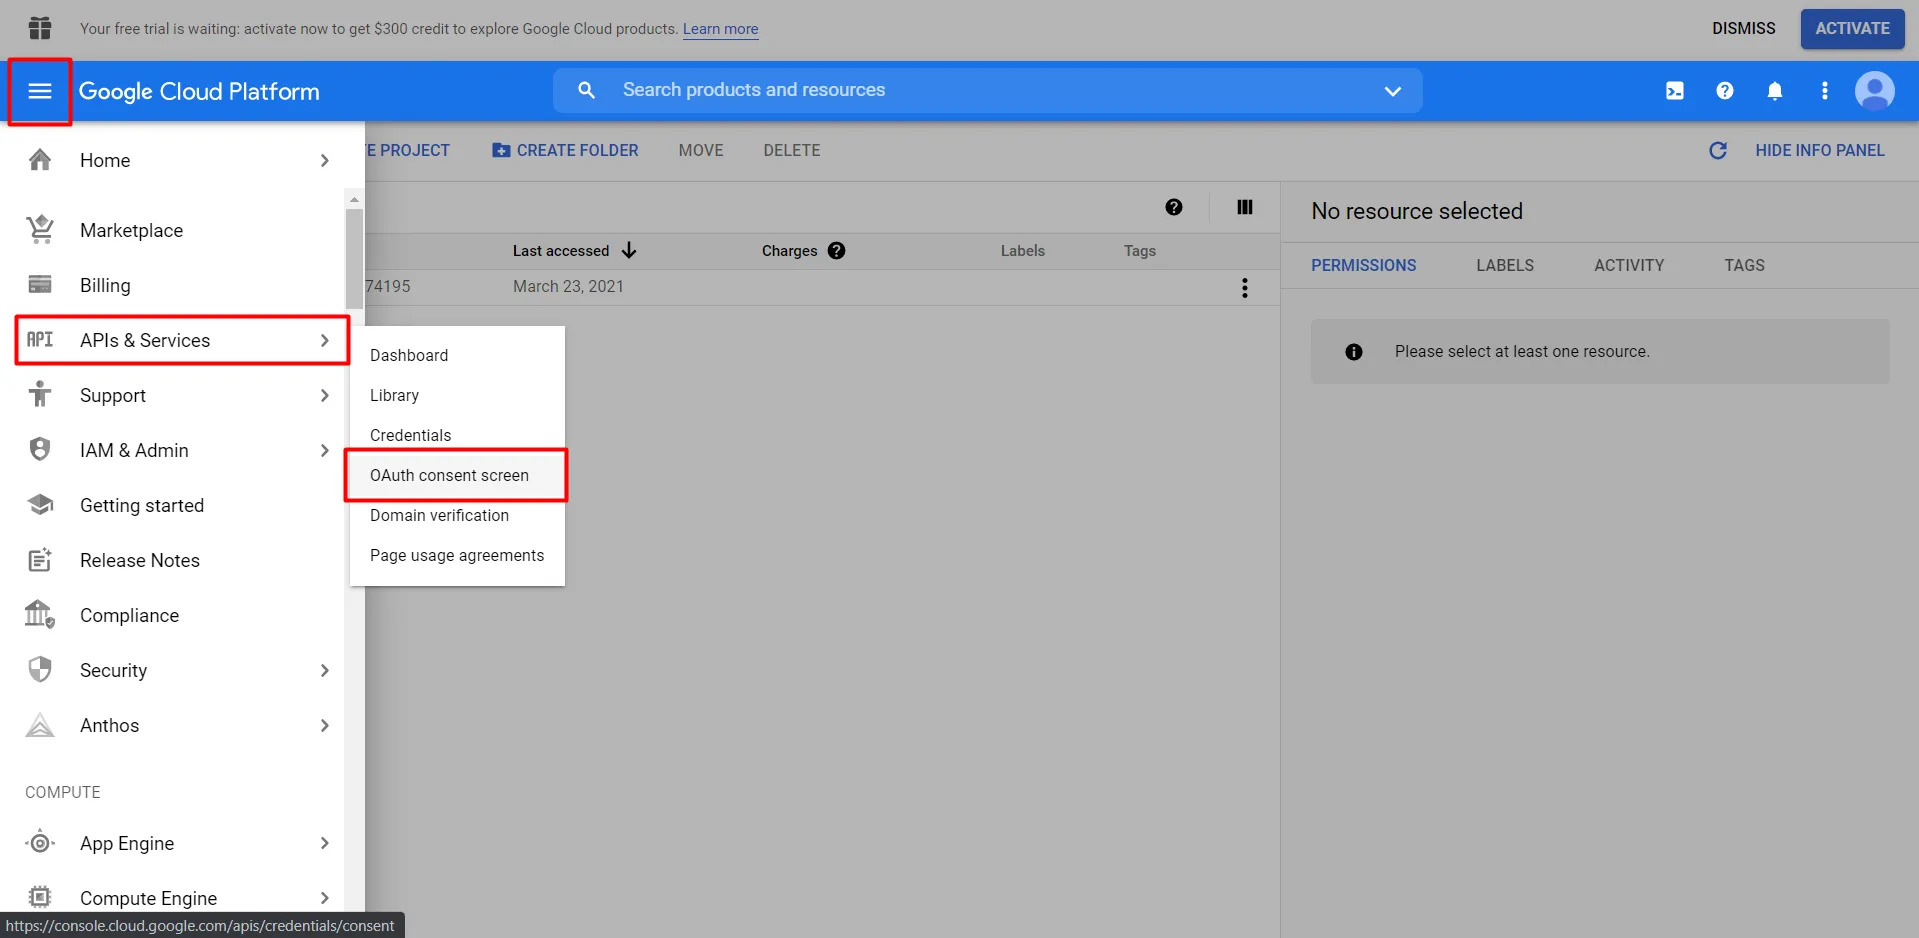 Google WordPress social login OAuth consent screen app